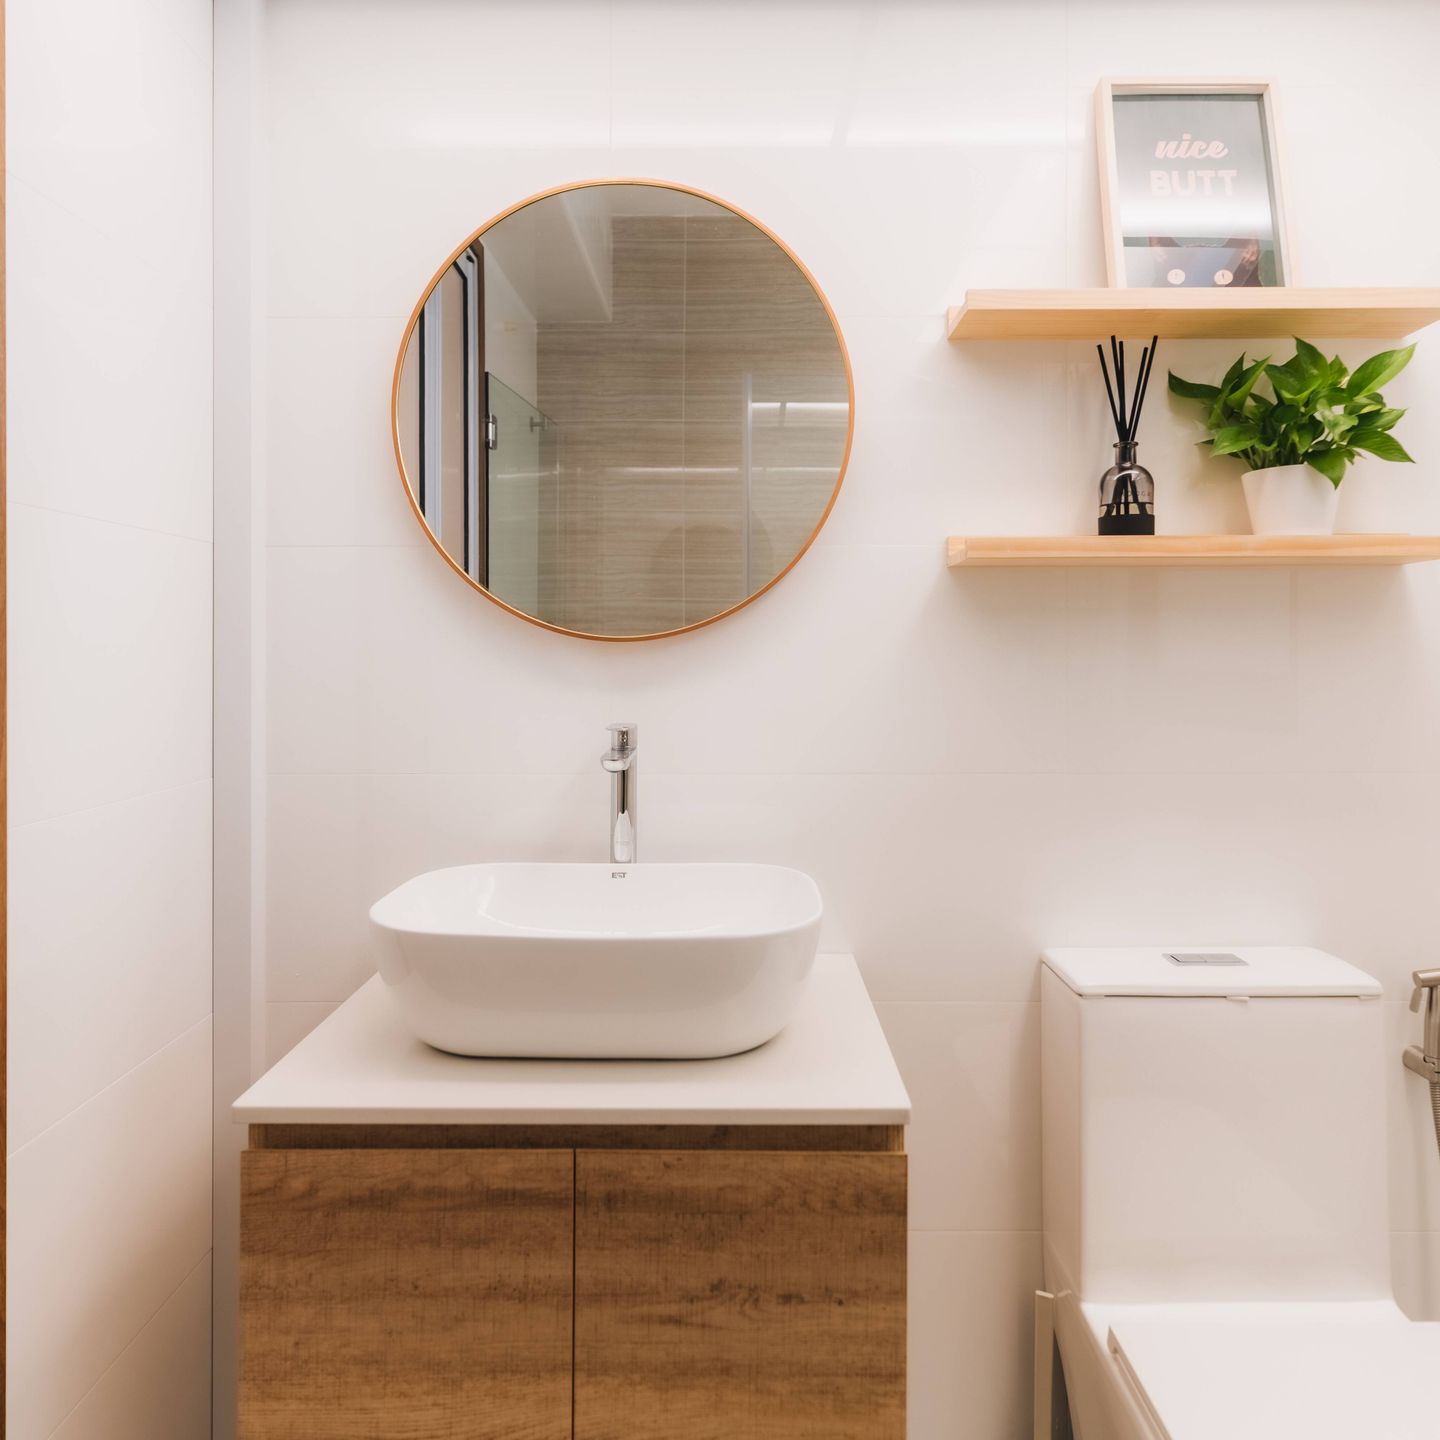 Minimal Scandinavian Design For Compact Bathrooms